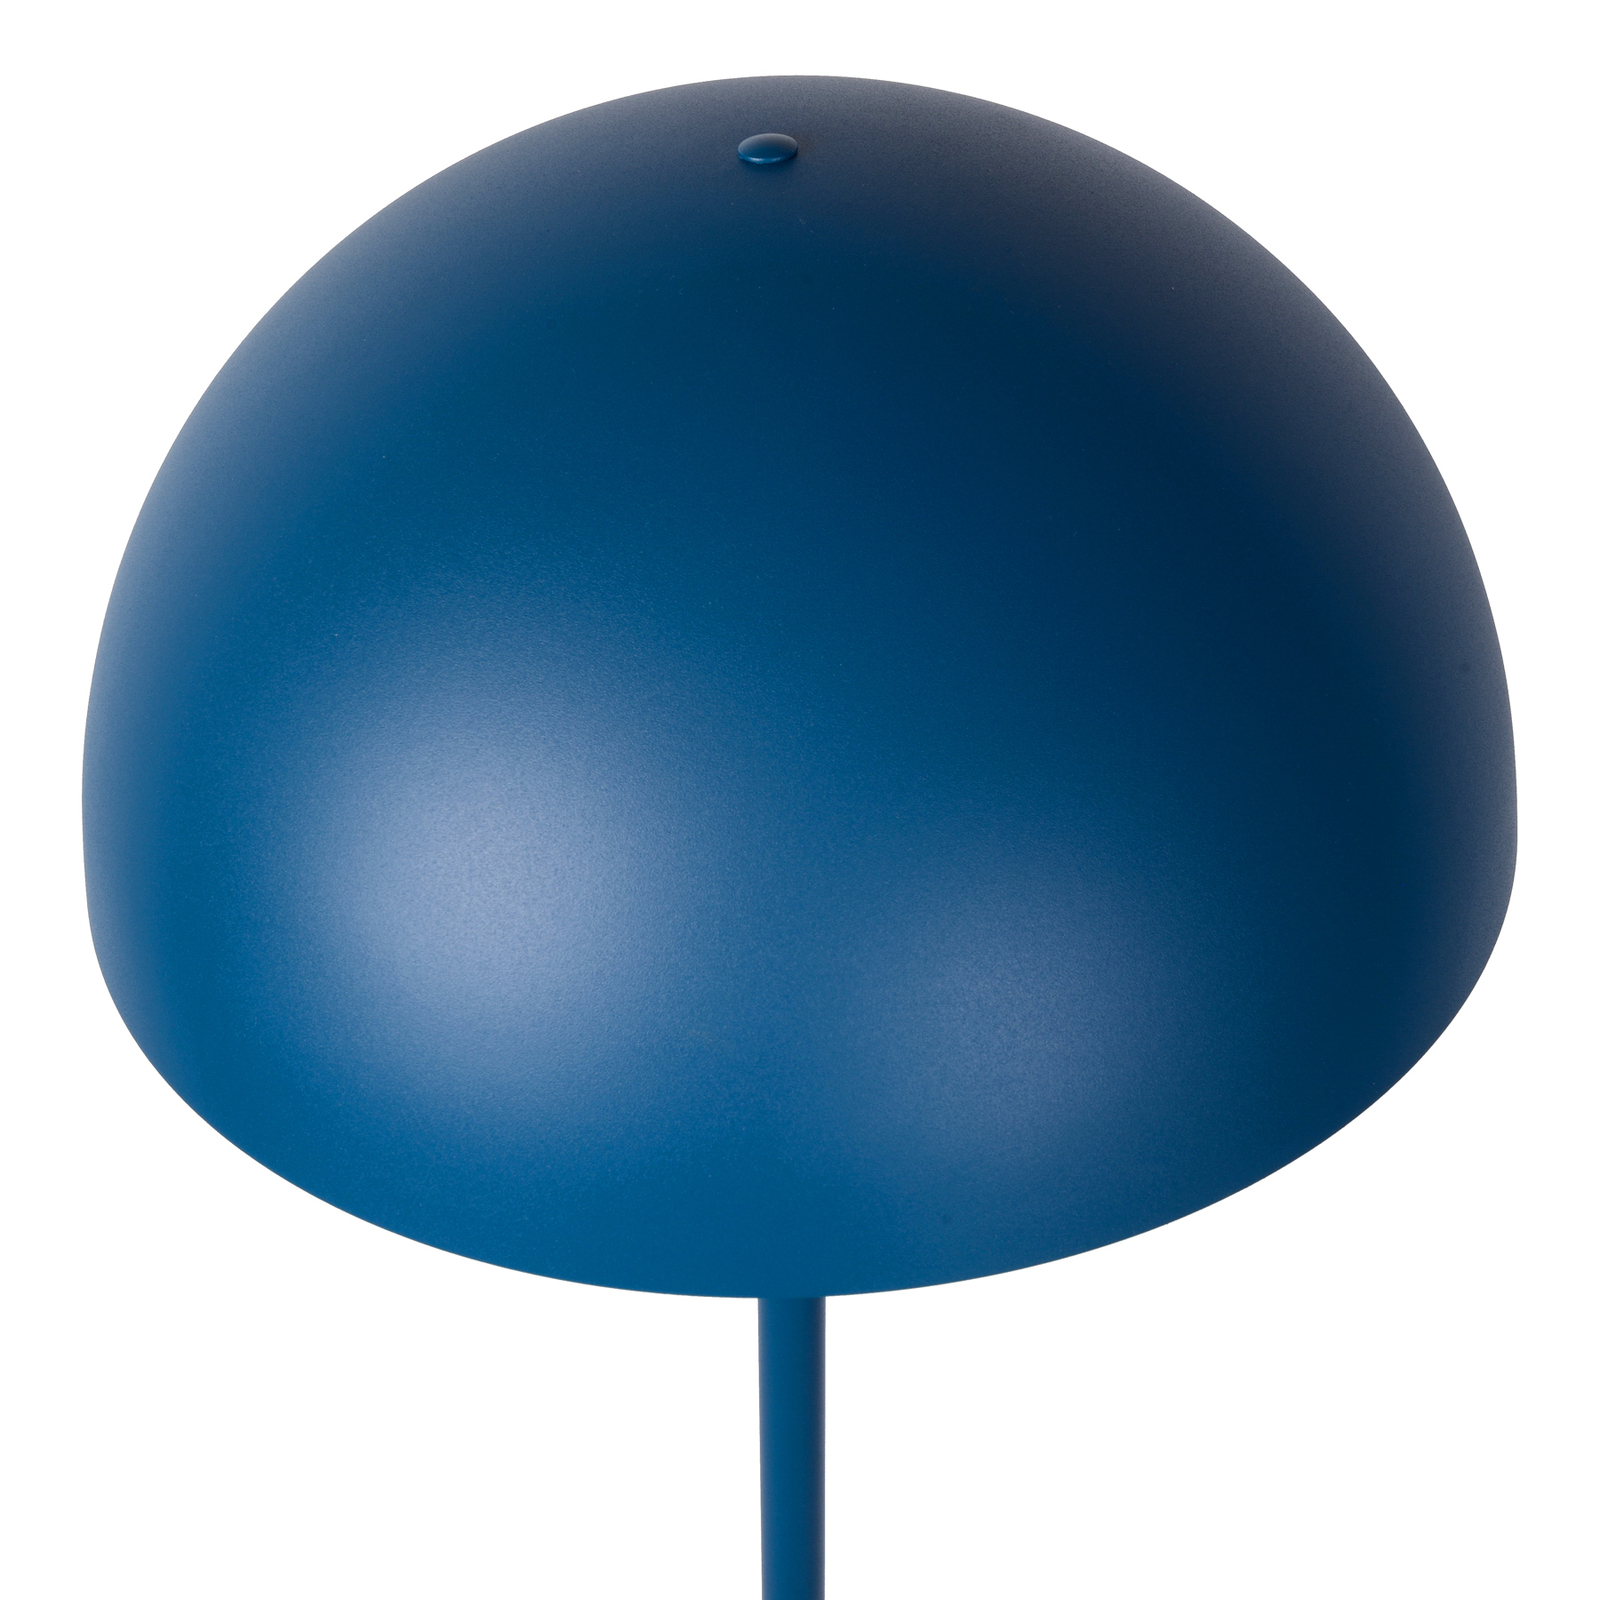 Vloerlamp Siemon van staal, Ø 35 cm, blauw